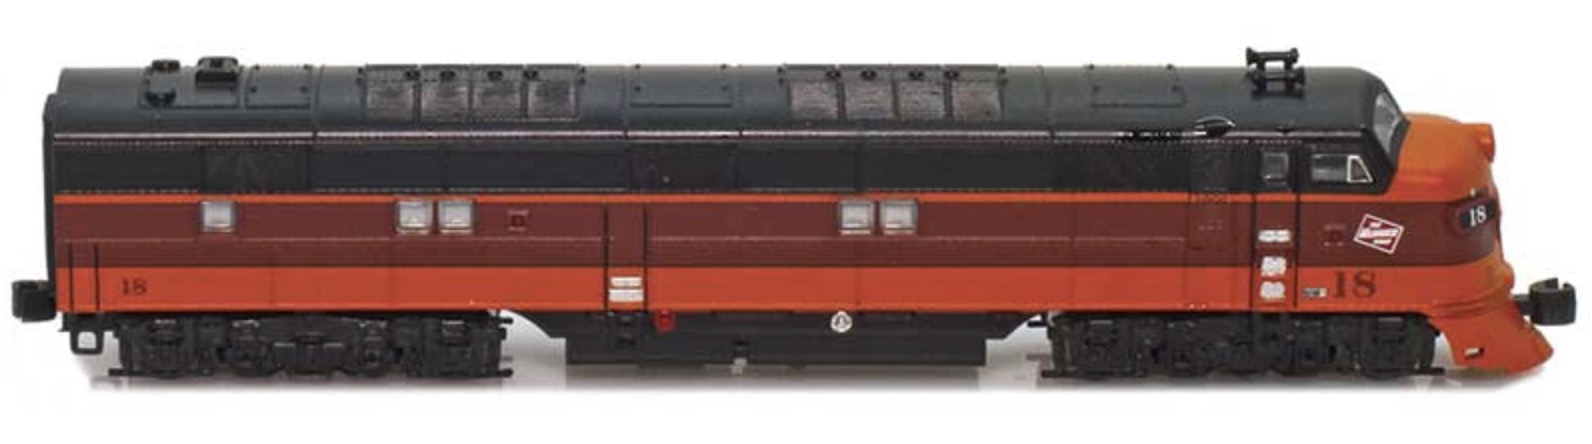 Z Scale - AZL - 64608-2 - Locomotive, Diesel, EMD E7 - Milwaukee Road - 19